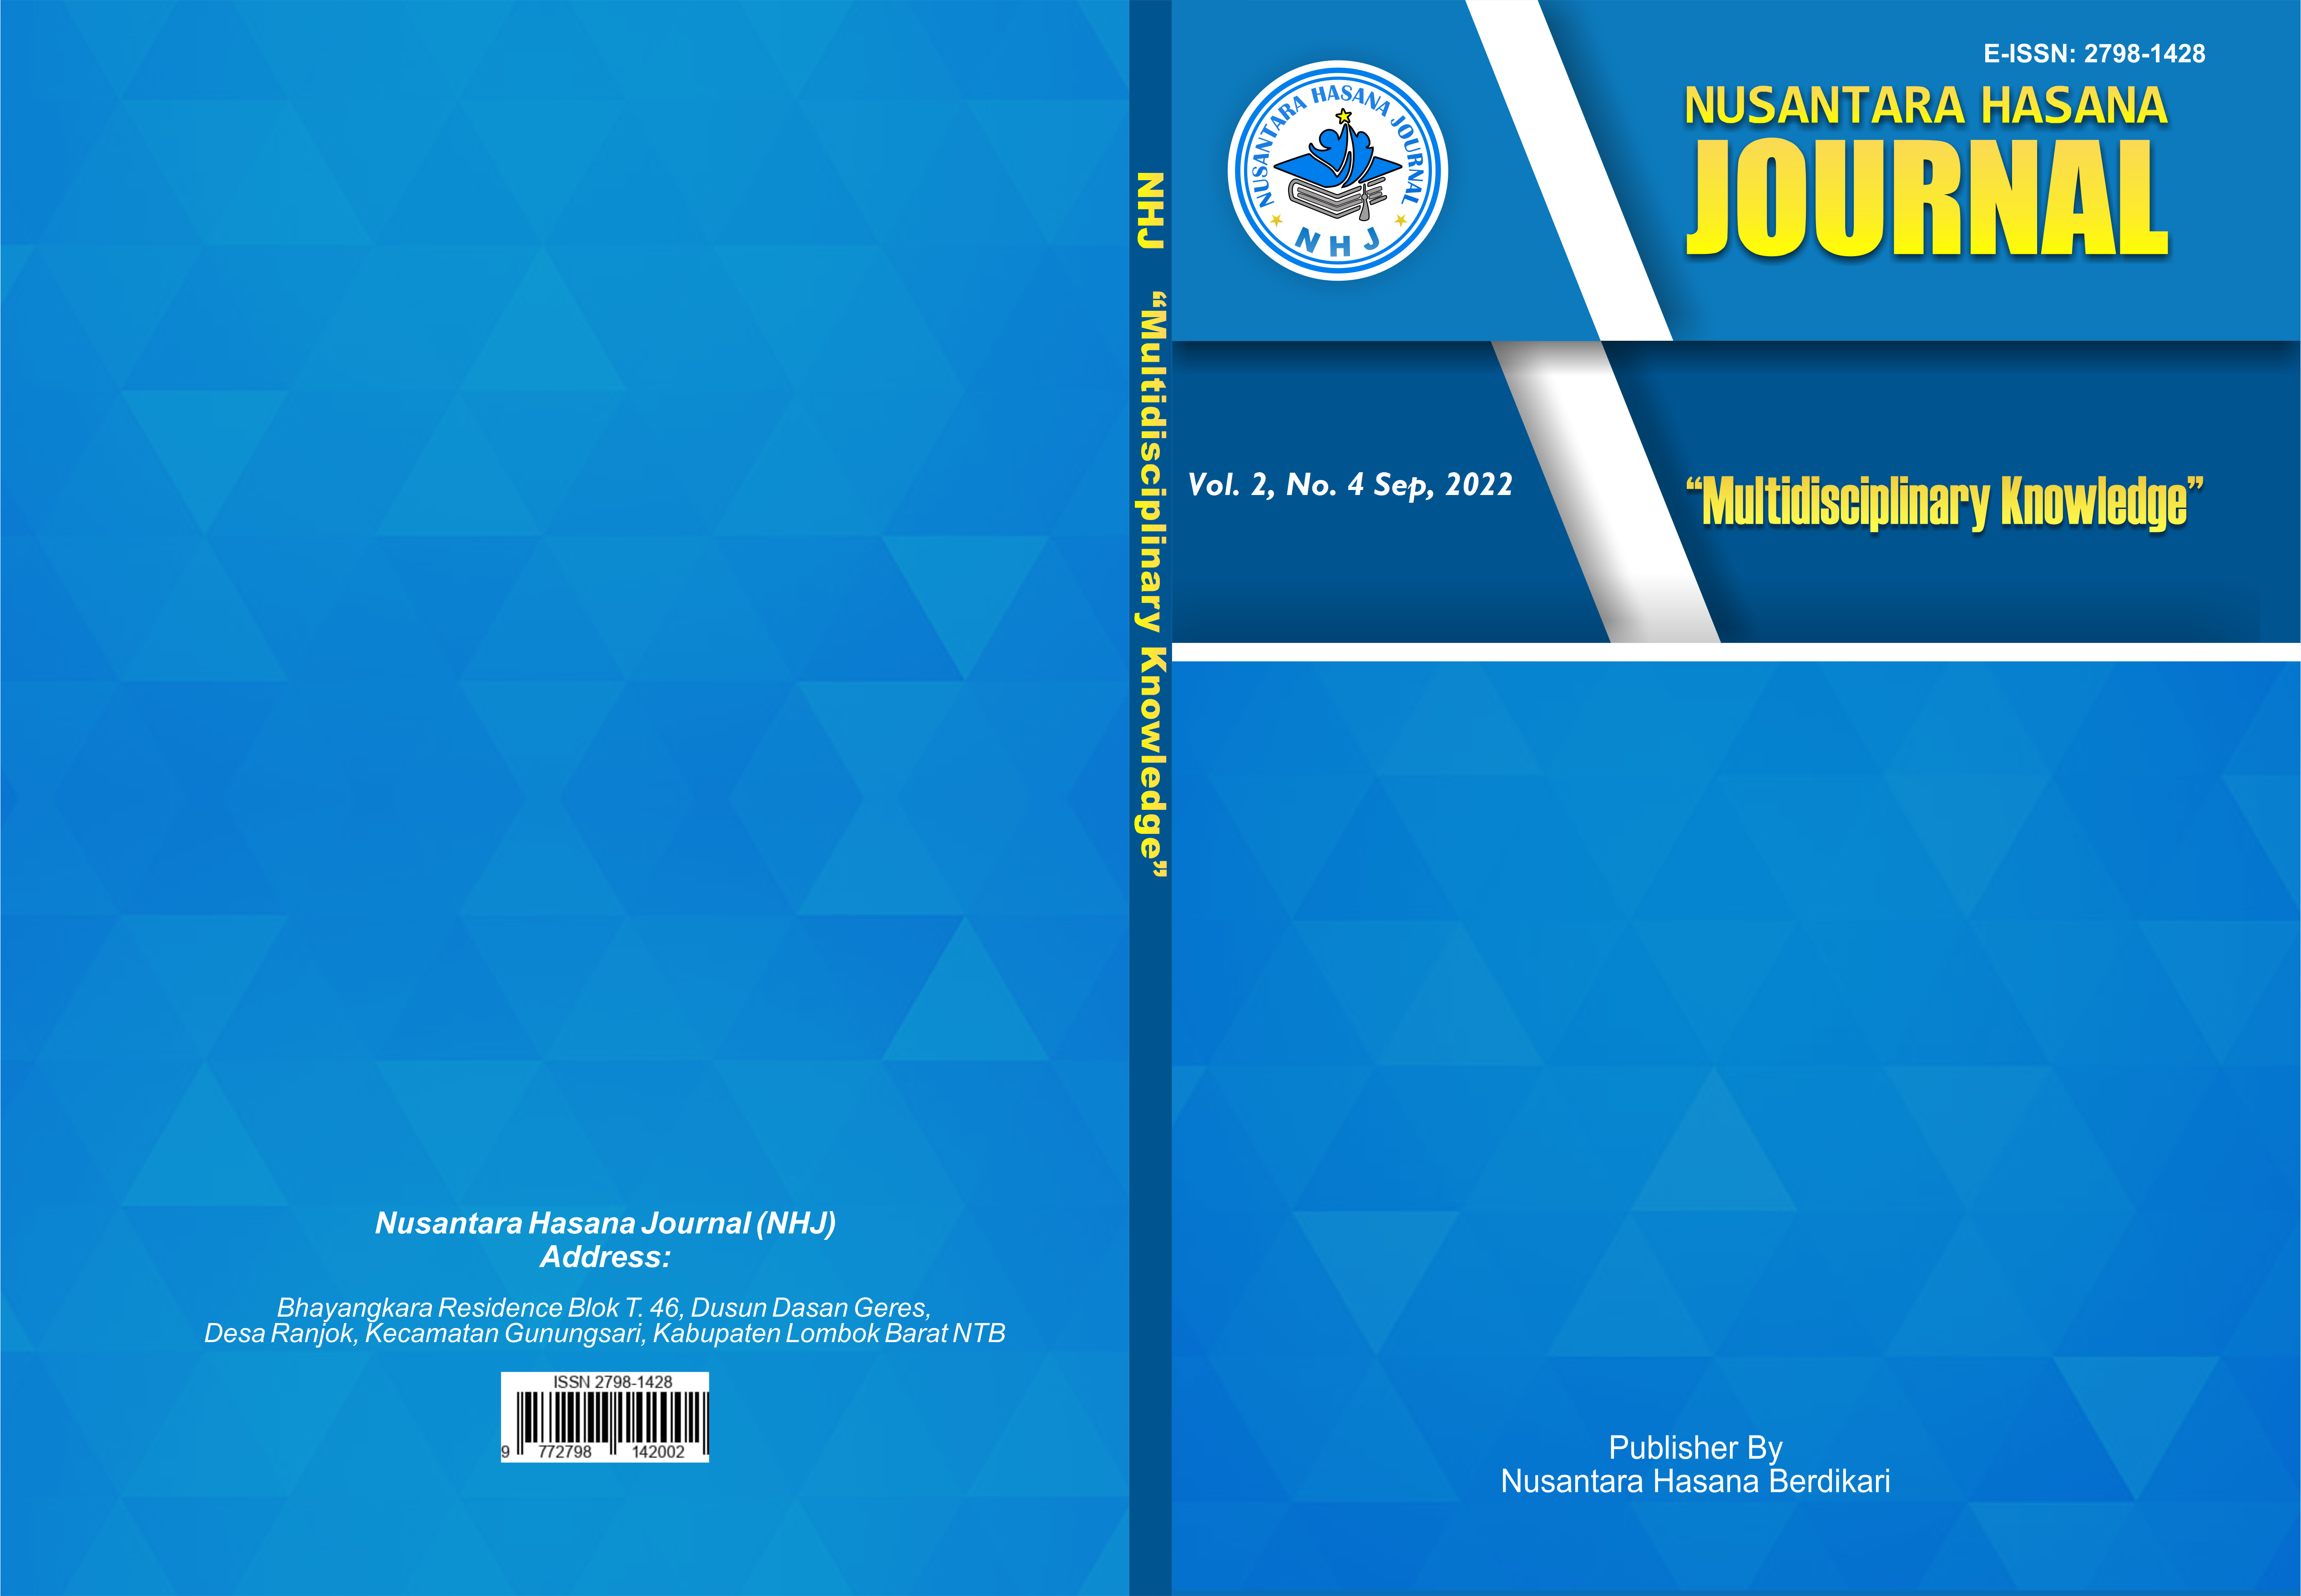 					View Vol. 2 No. 4 (2022): Nusantara Hasana Journal, September 2022
				